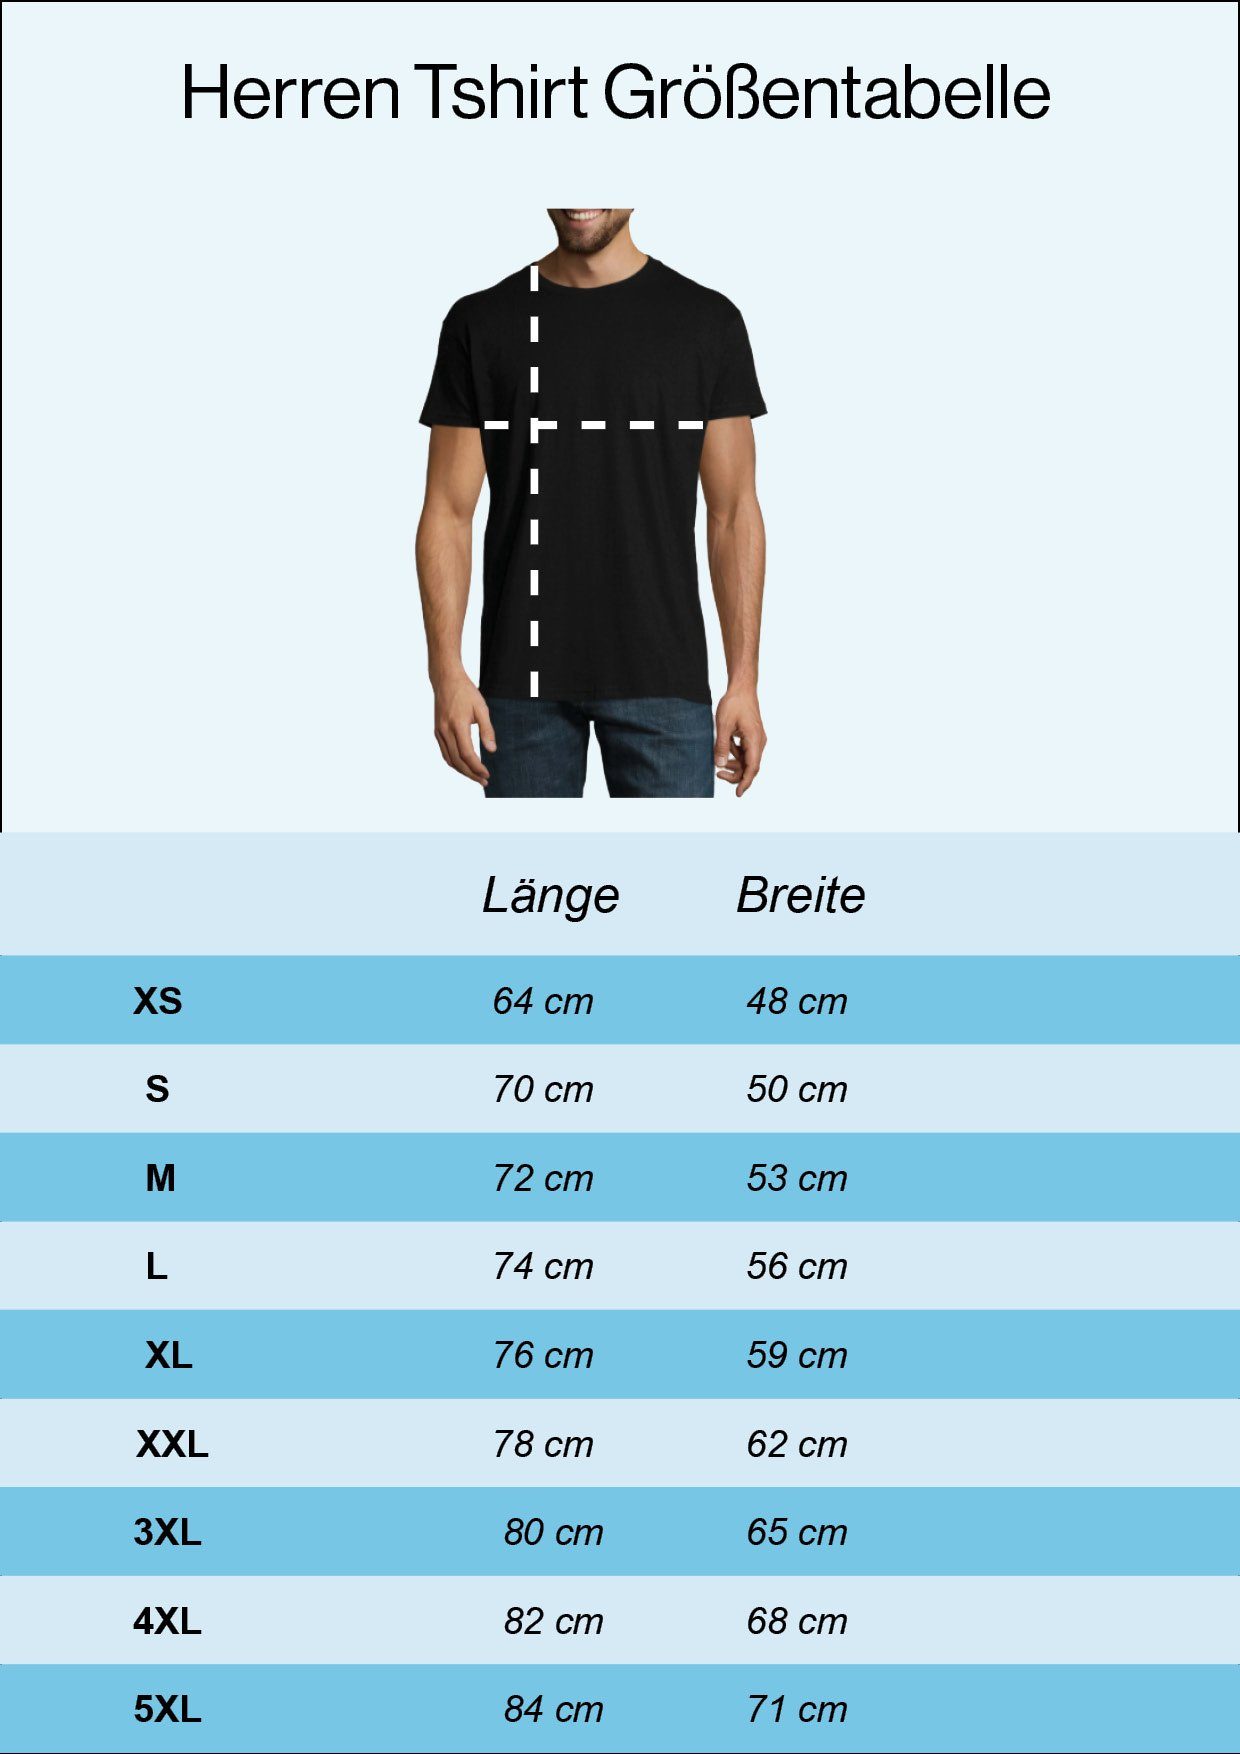 Herren mit trendigem T-Shirt Youth Designz Navyblau Frontprint Fun T-Shirt Toad